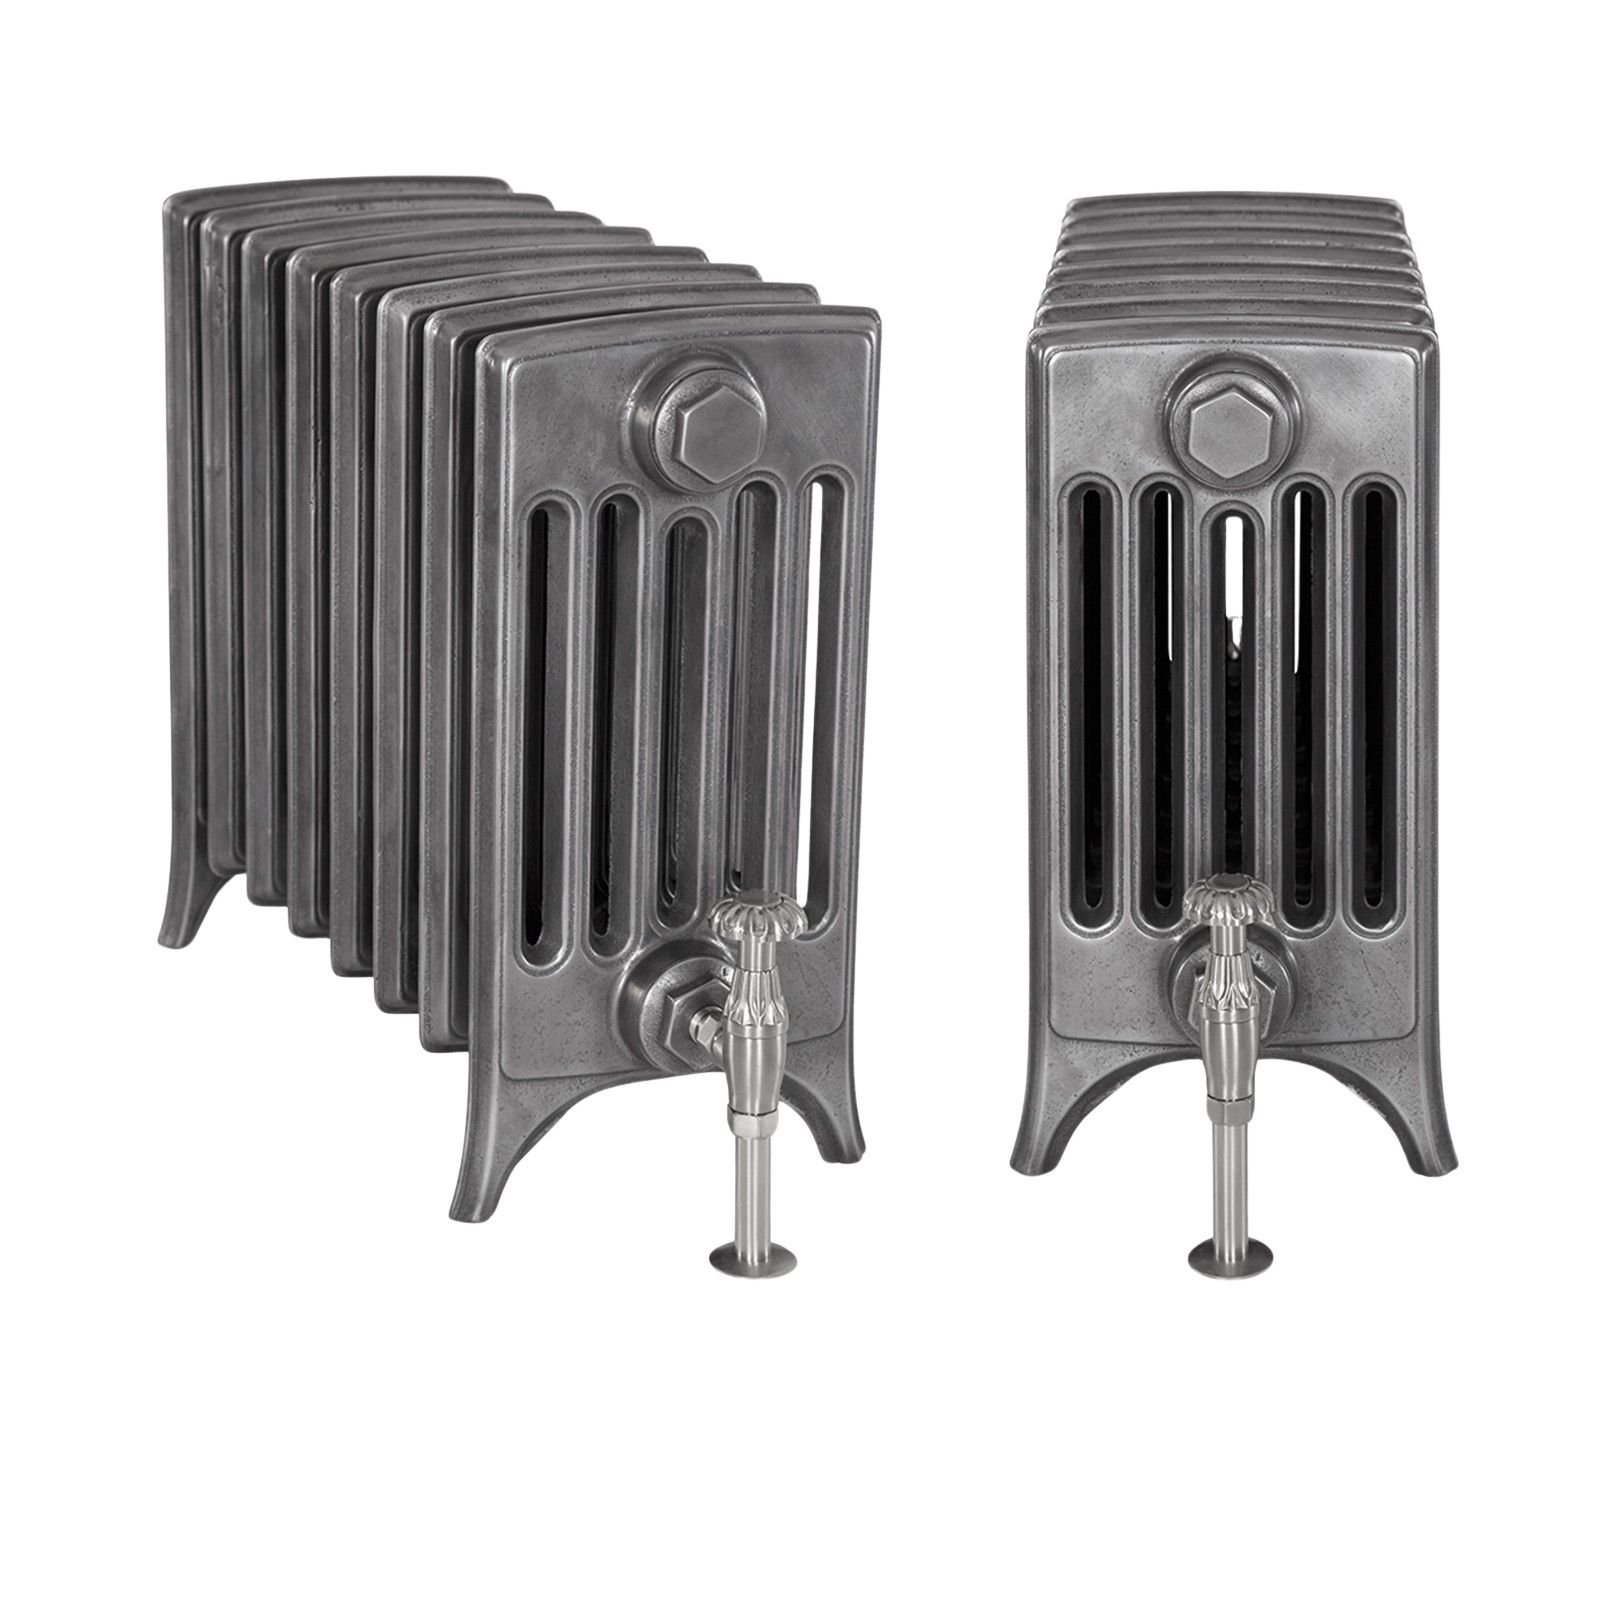 Rathbone radiator 6 columns - 460mm high